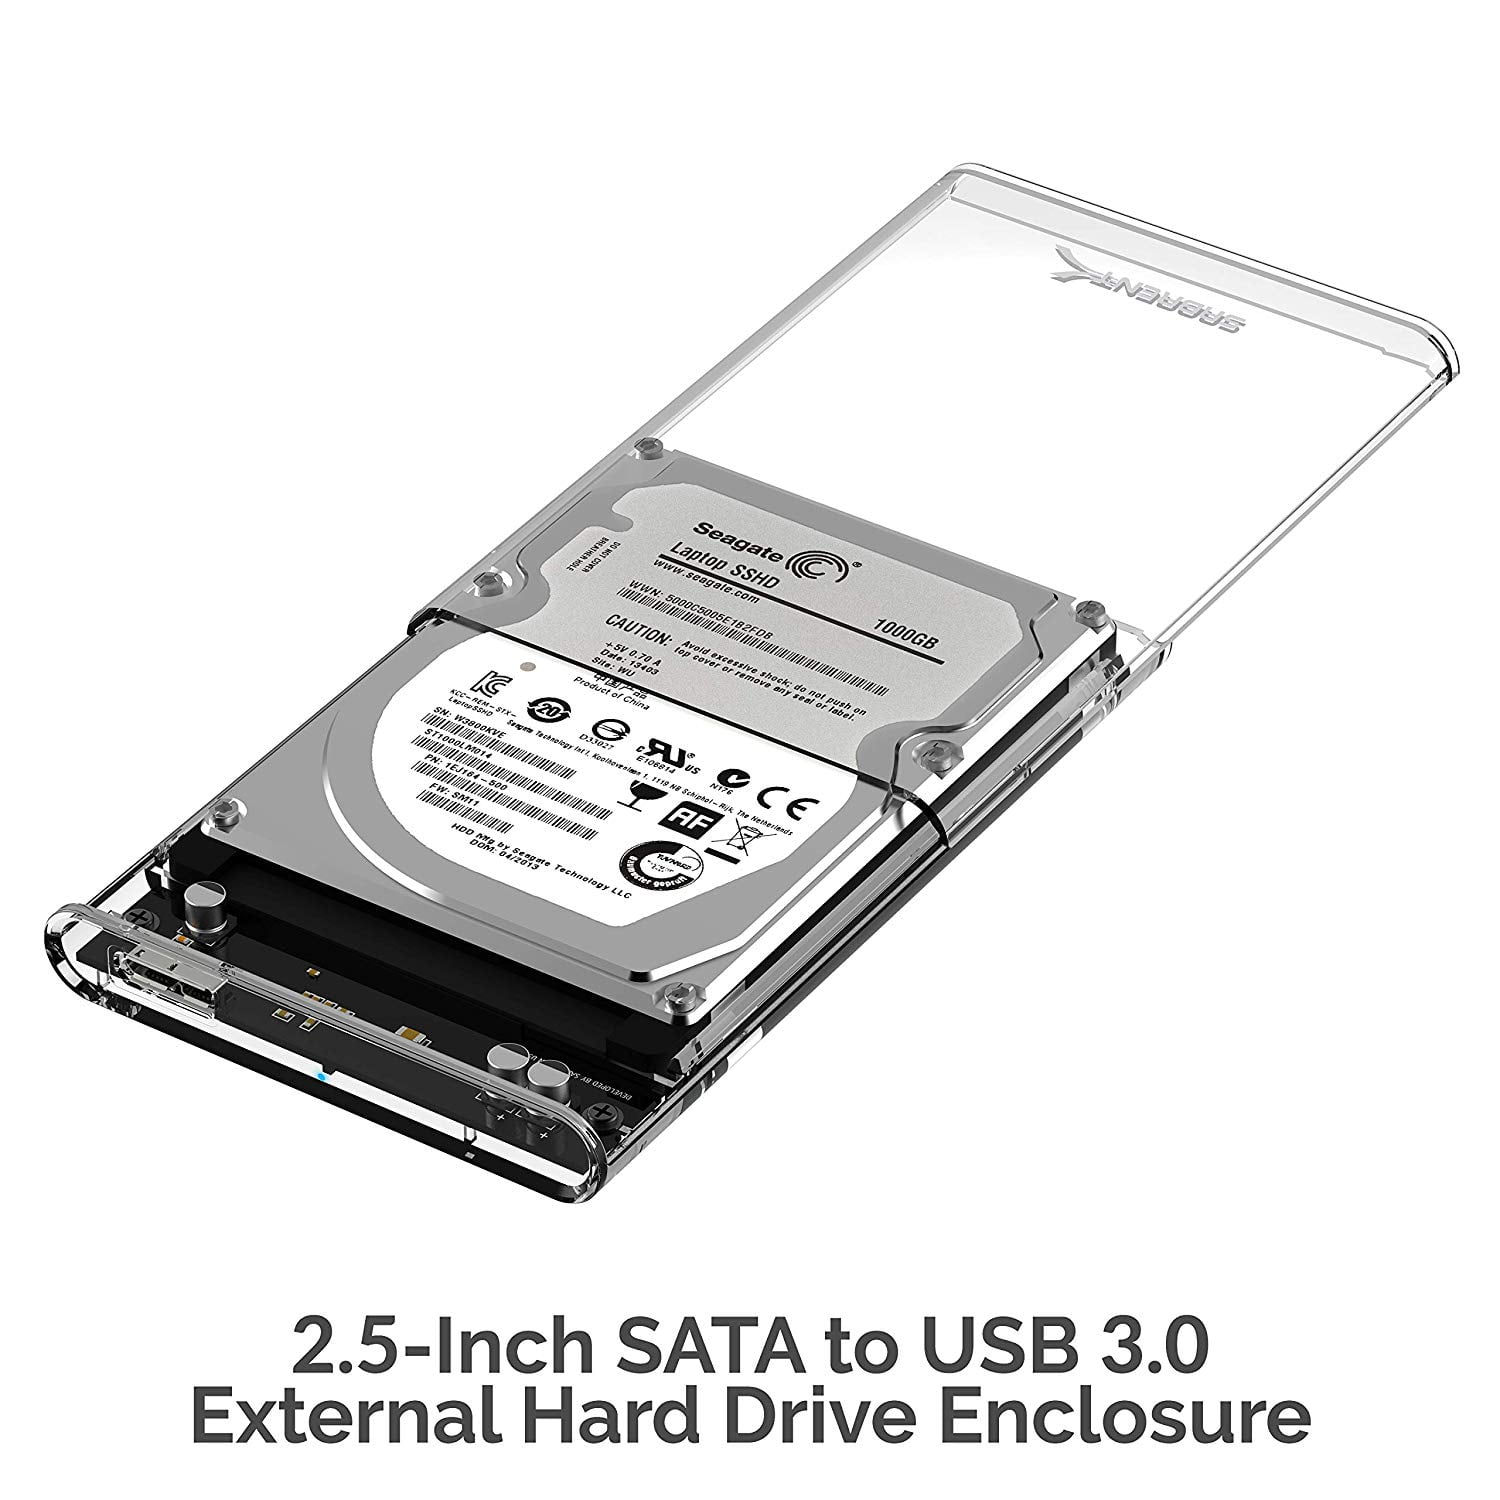 Sabrent 2.5-Inch SATA to USB 2.0 External Hard Drive Enclosure EC-UST25 